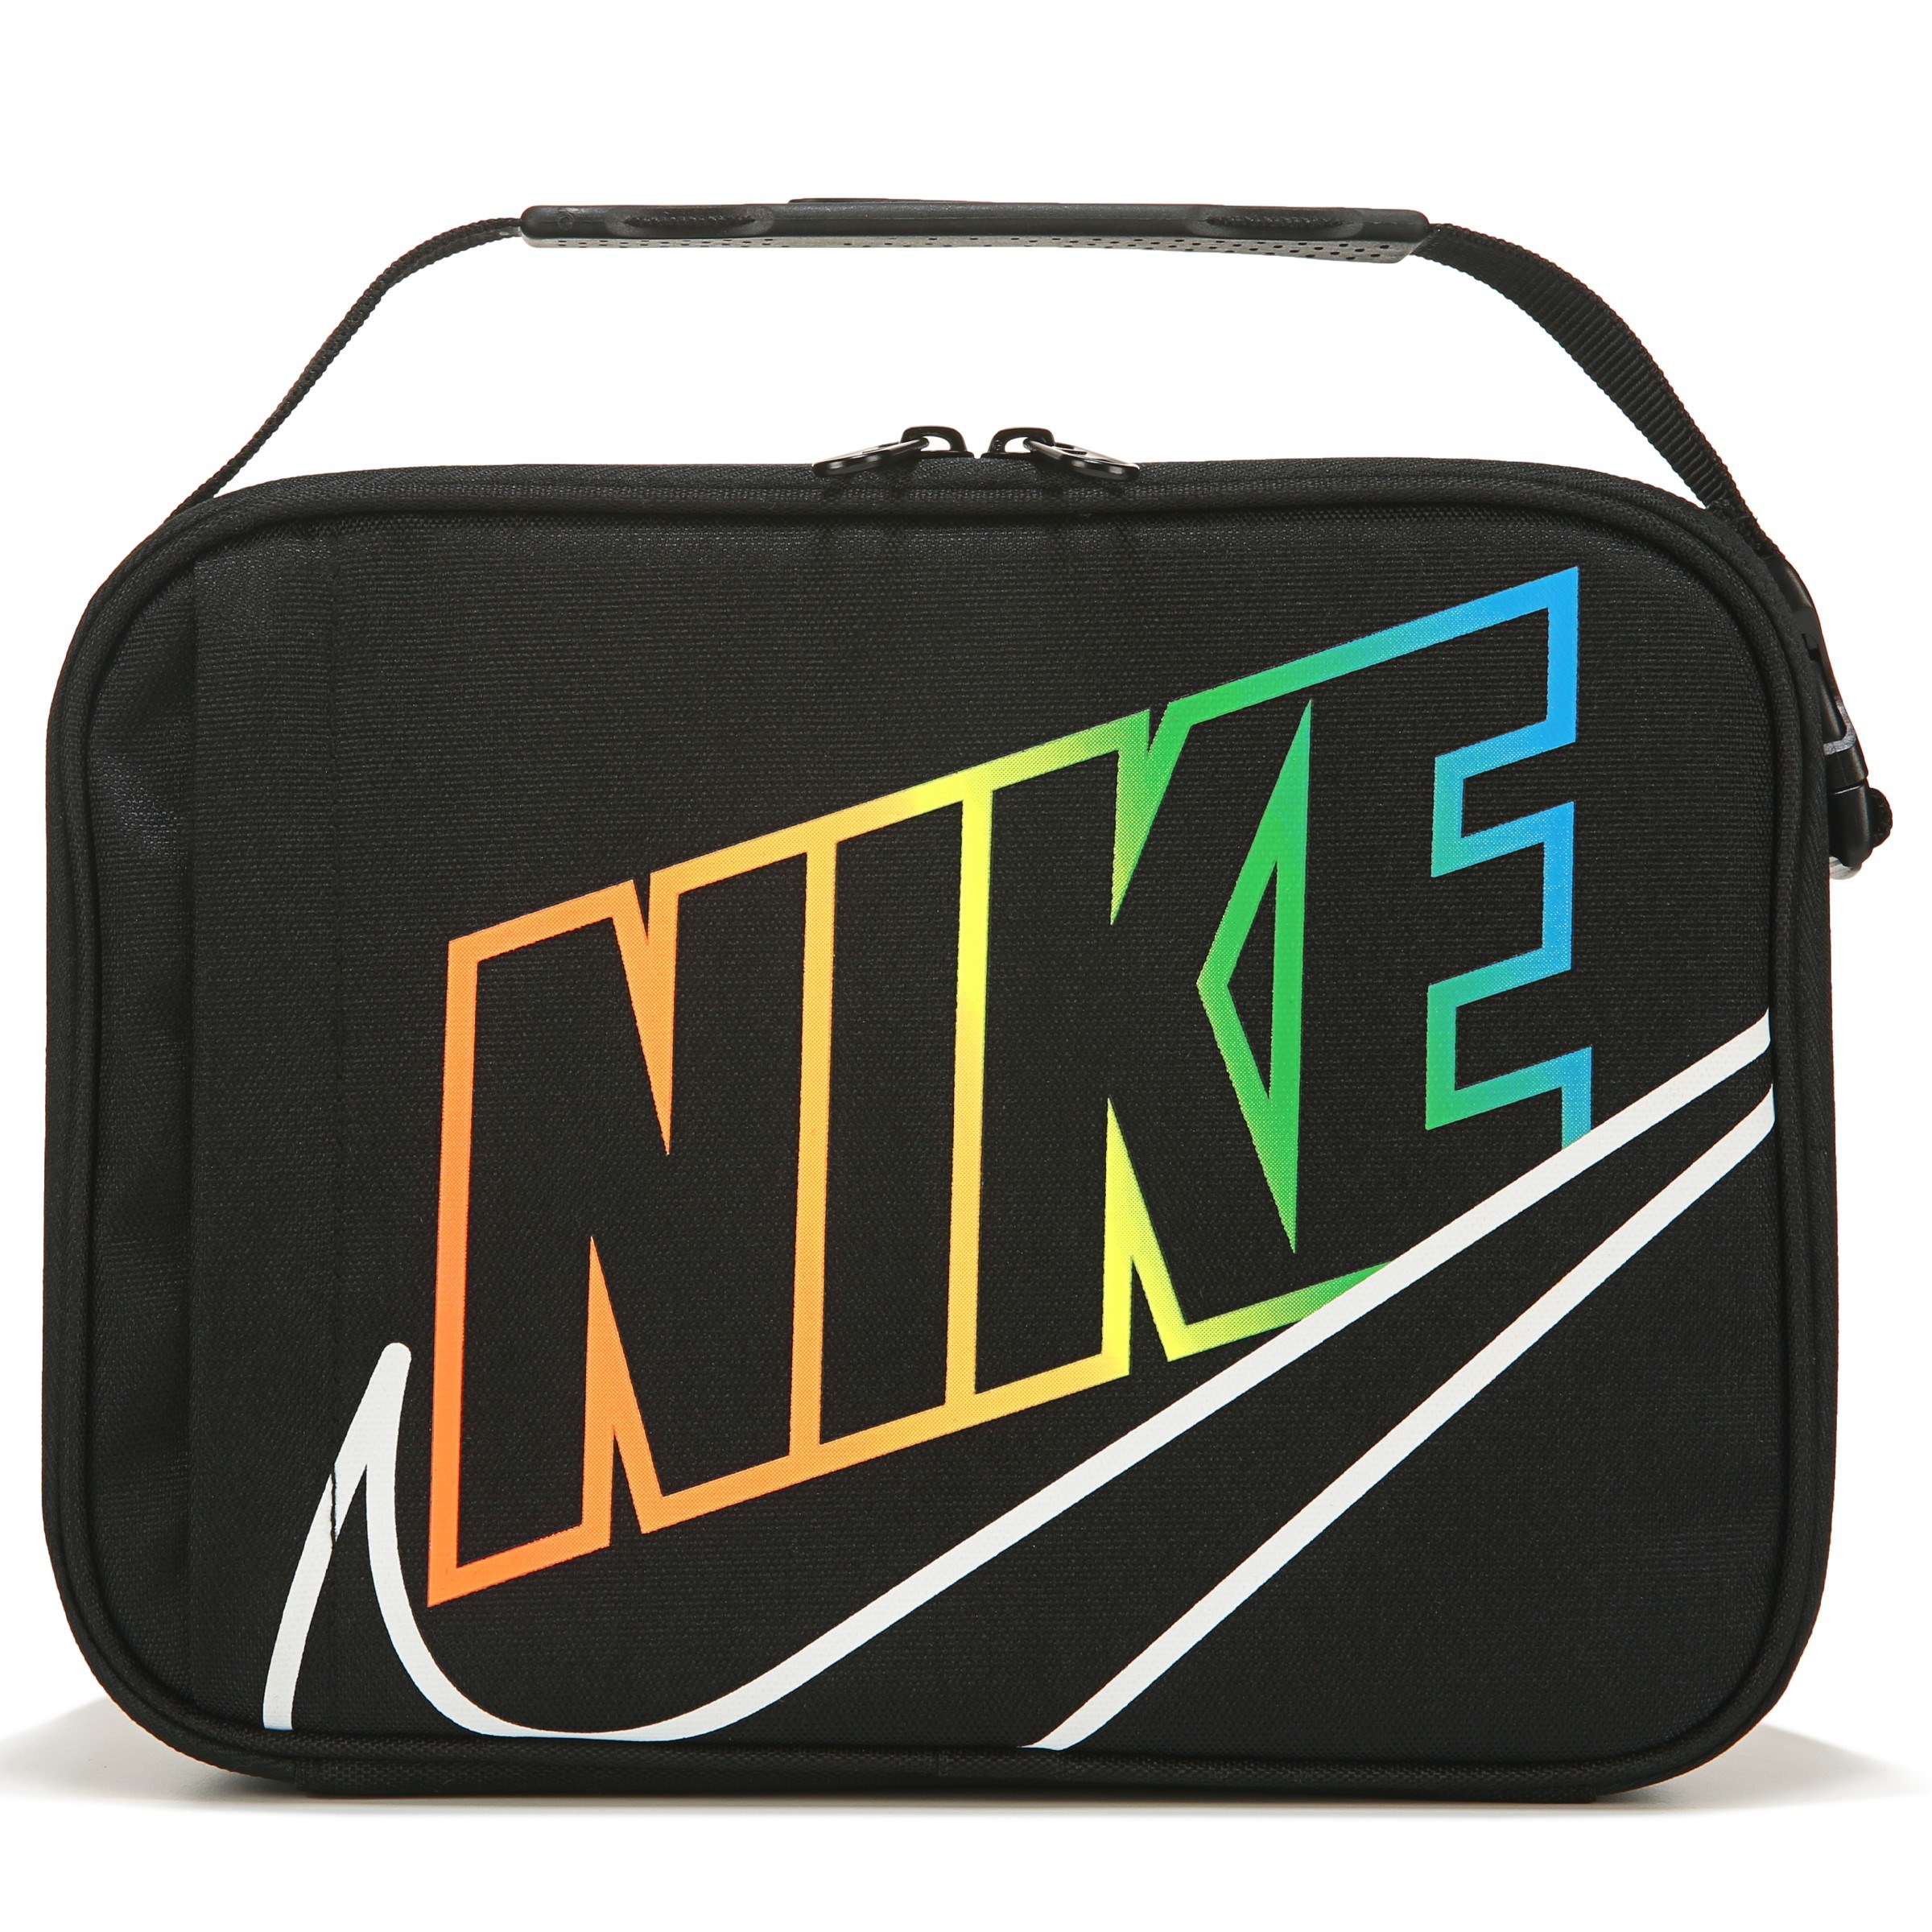 terugtrekken schudden anders Nike Futura Fuel Pack Lunch Box | Famous Footwear